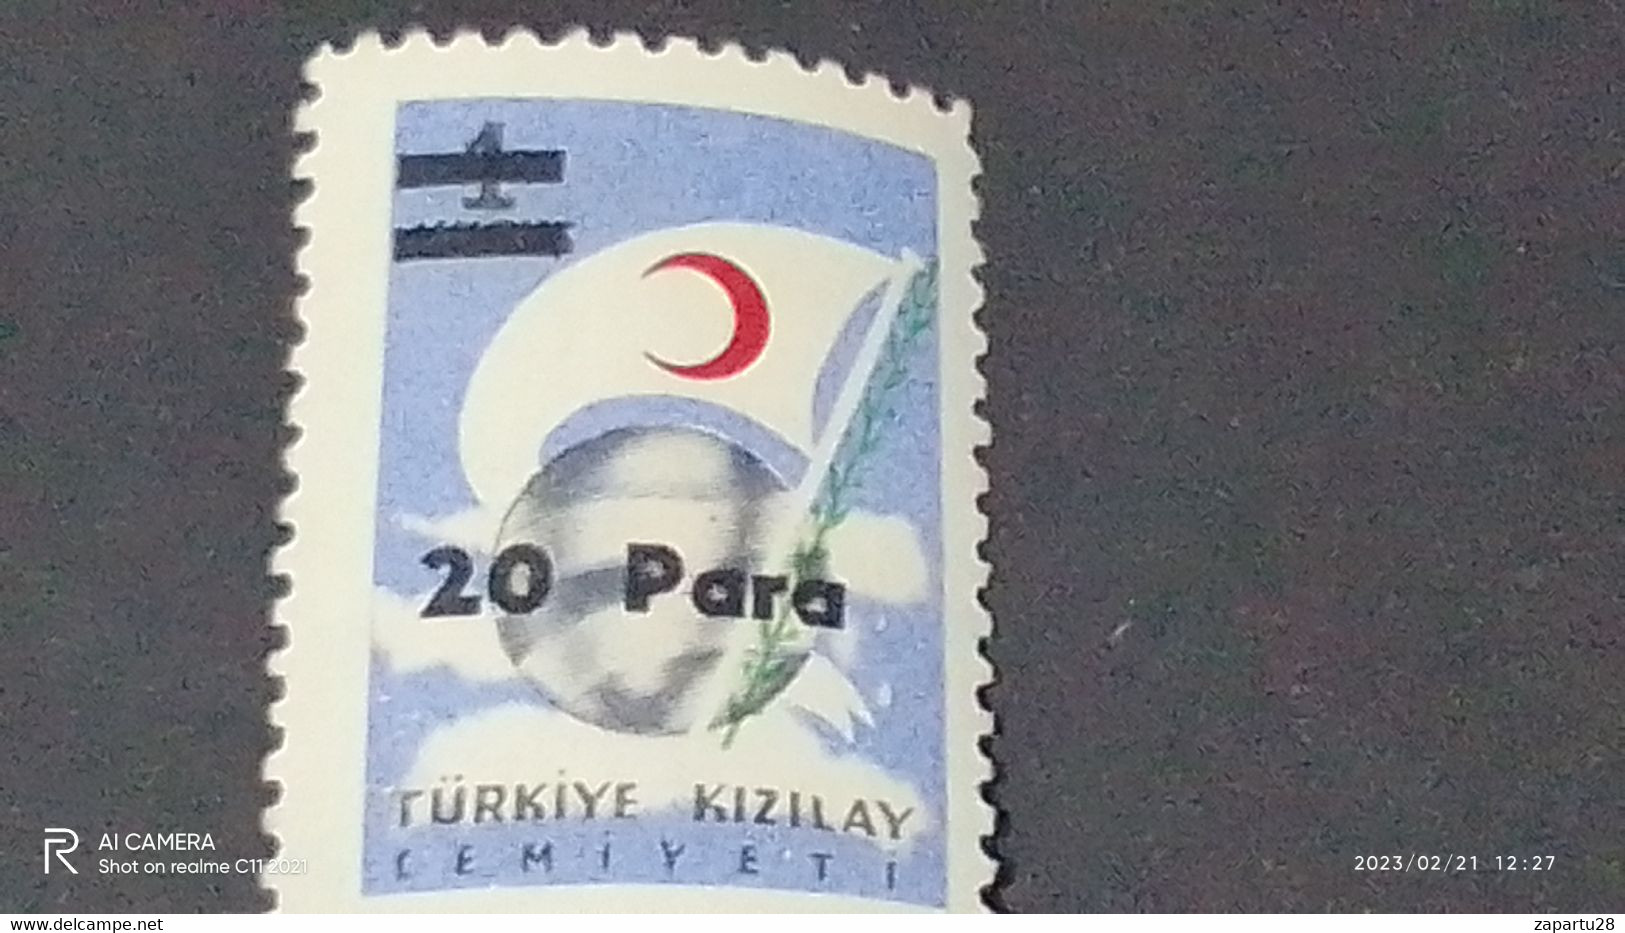 TÜRKEY--YARDIM PULLARI-1950-60  KIZILAY CEMİYETİ  2.50K  DAMGASIZ - Liefdadigheid Zegels